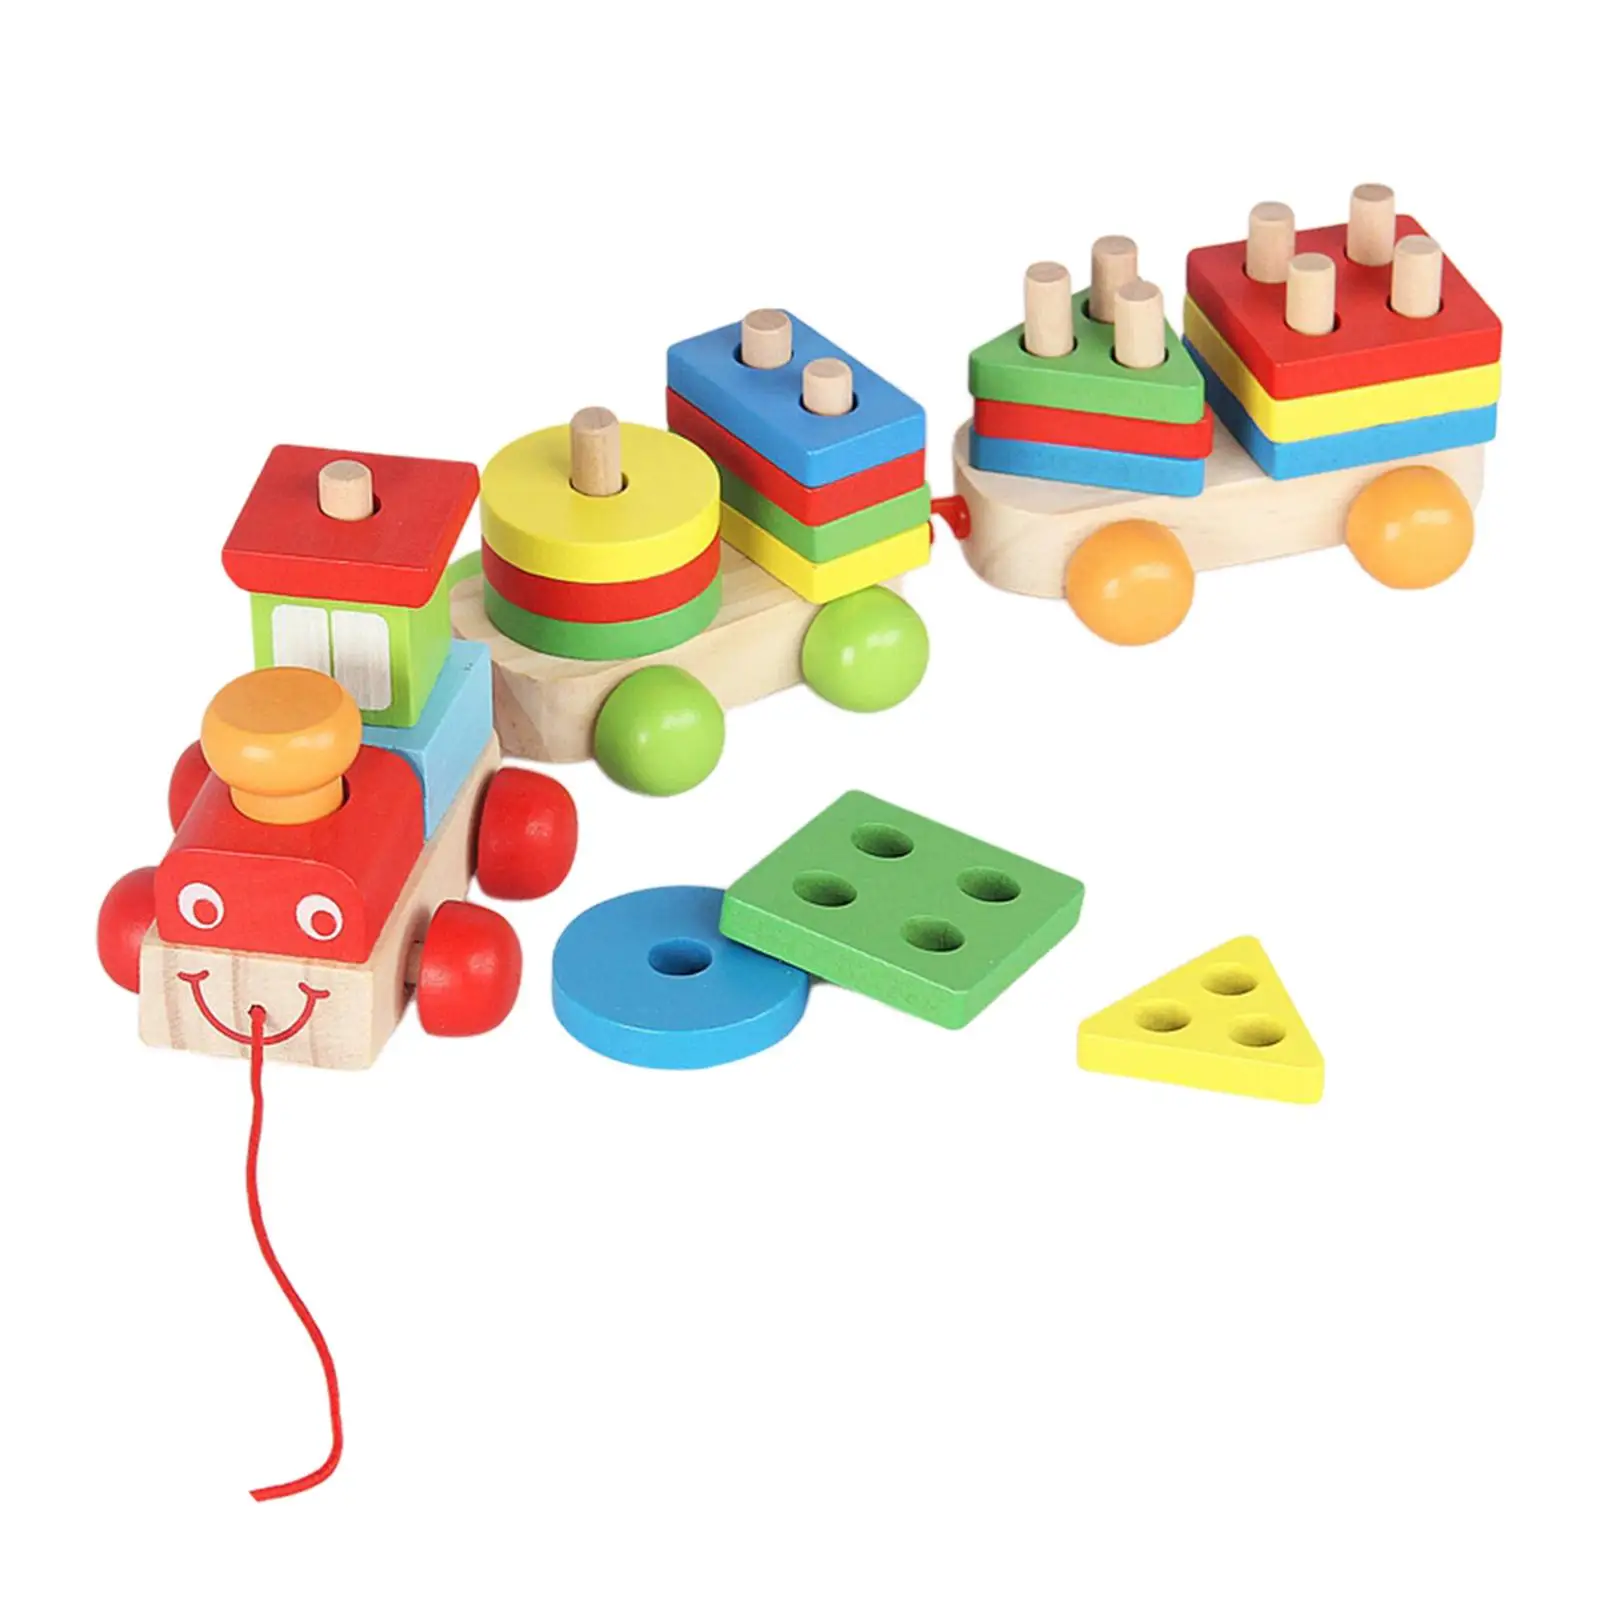 Wooden Matching Toy Developmental Toy Intelligence Toy Matching Puzzle Stacker for Preschool Kids Boy Girls Children Gift